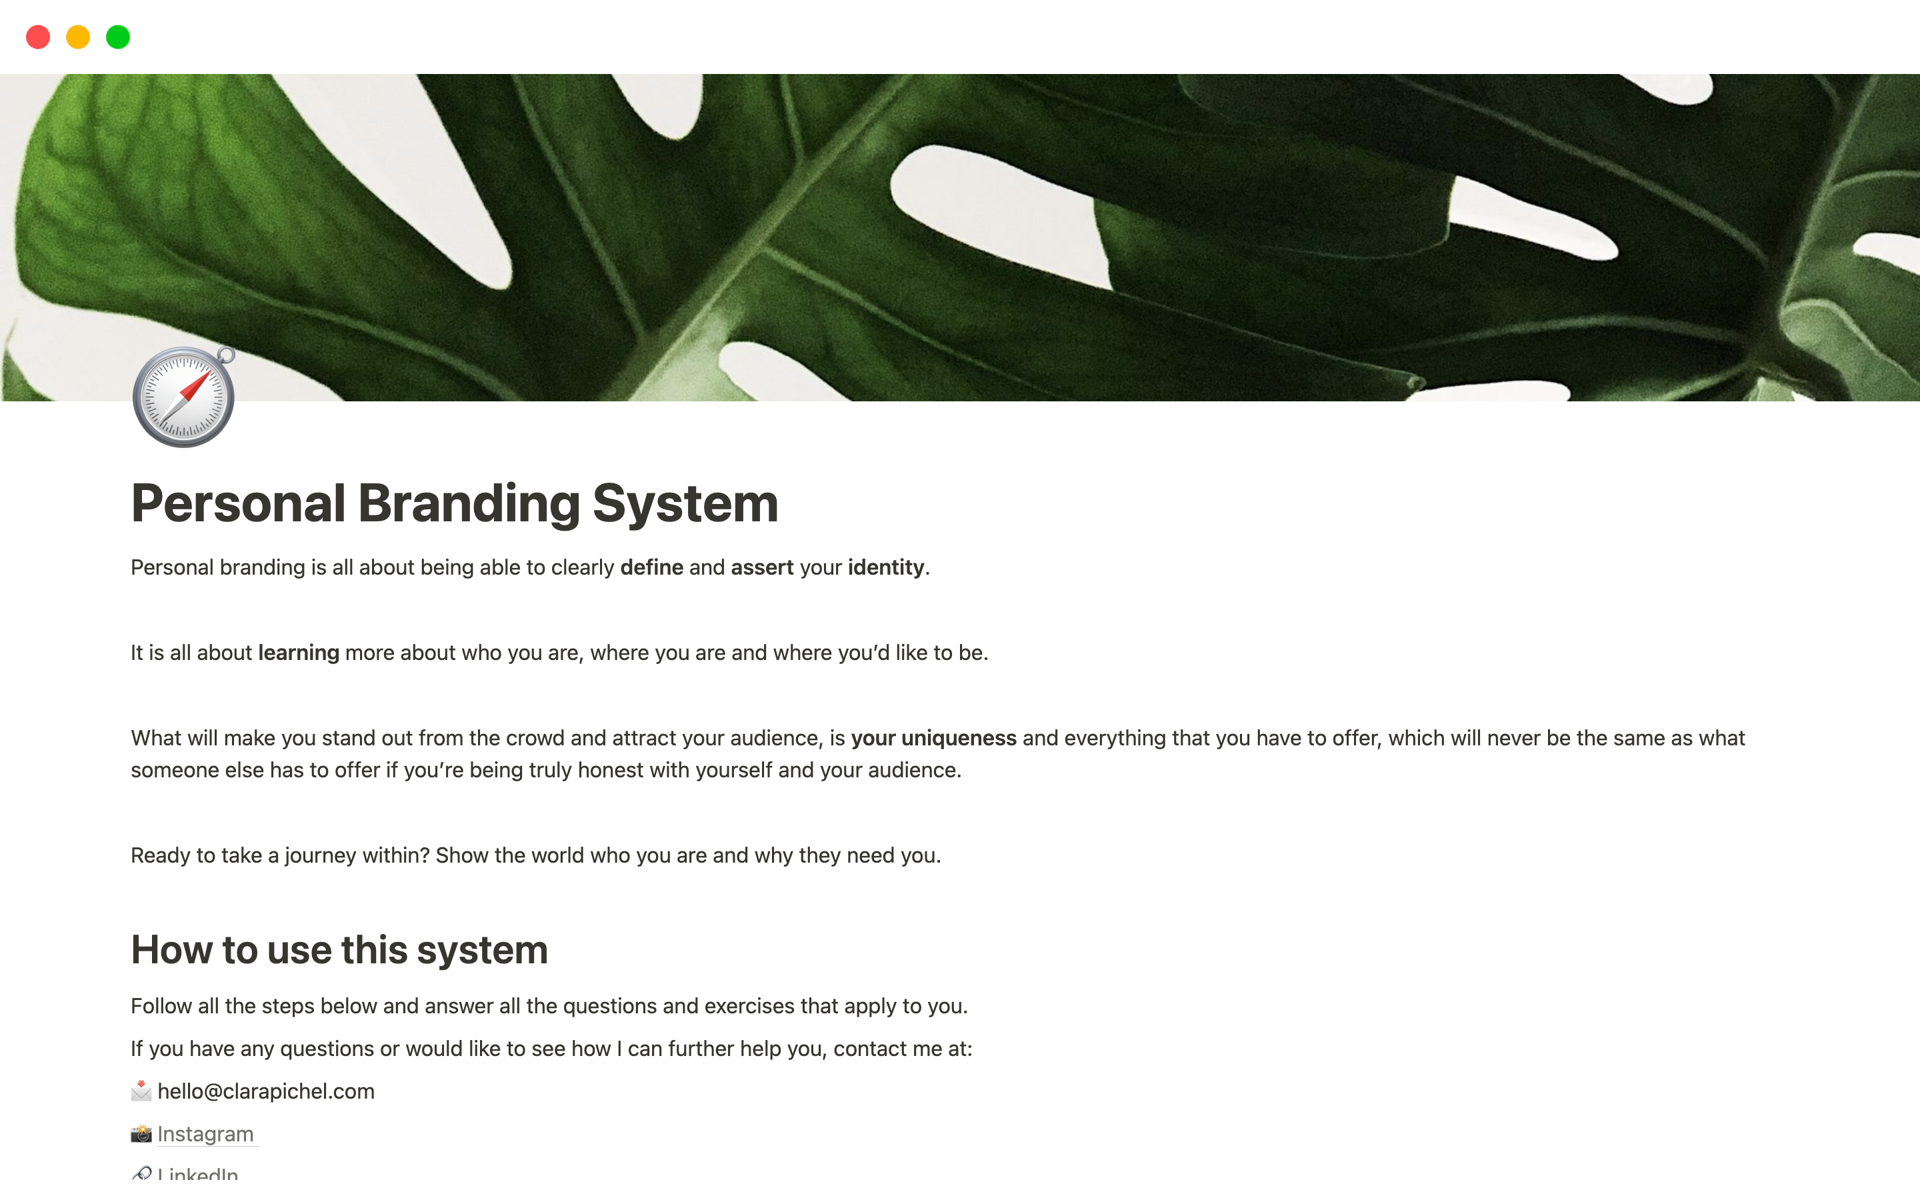 Vista previa de plantilla para Personal Branding System 